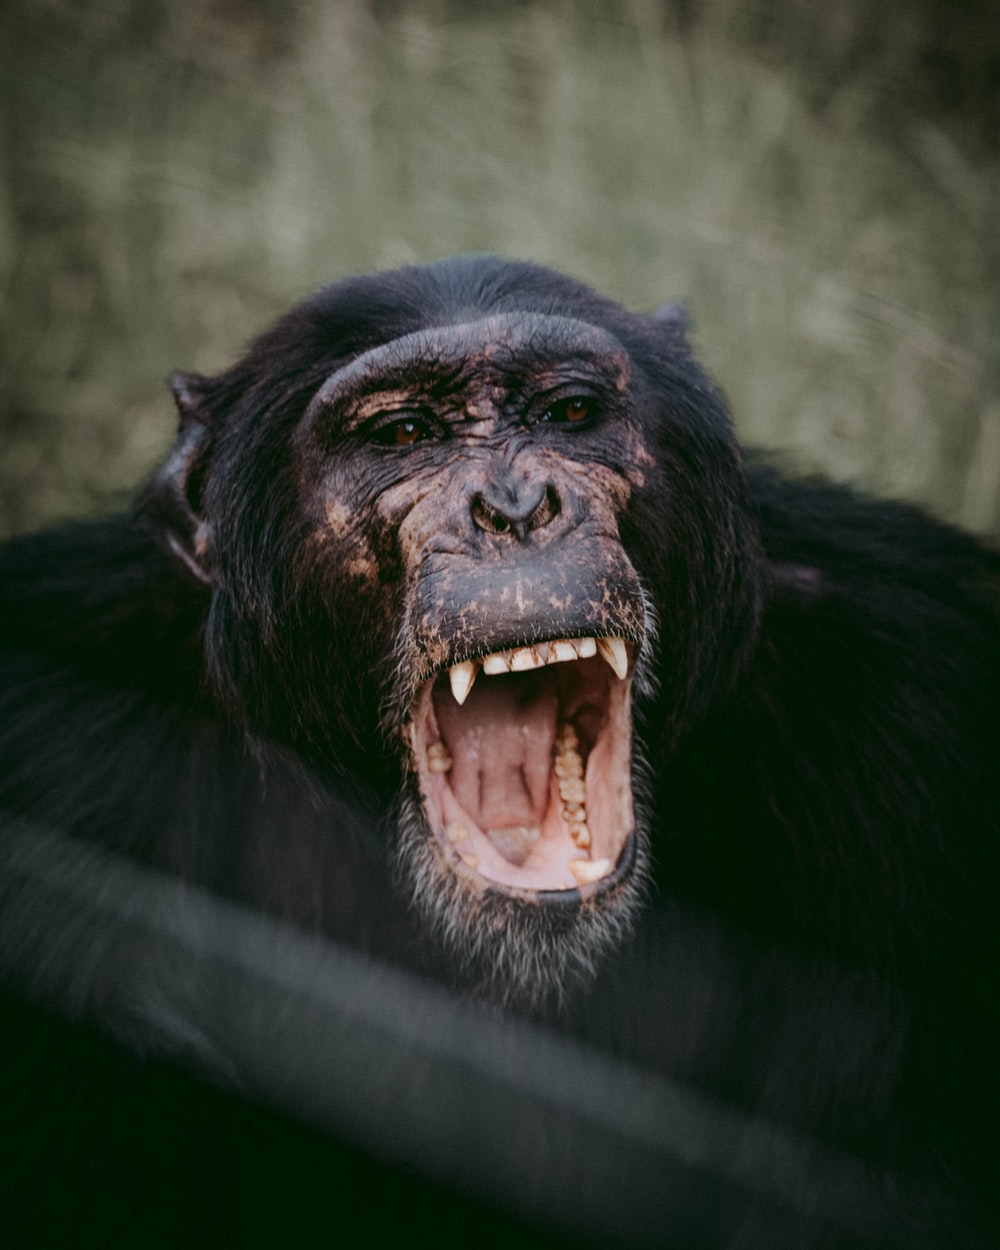 Chimpanzee Picture. Download Free Image